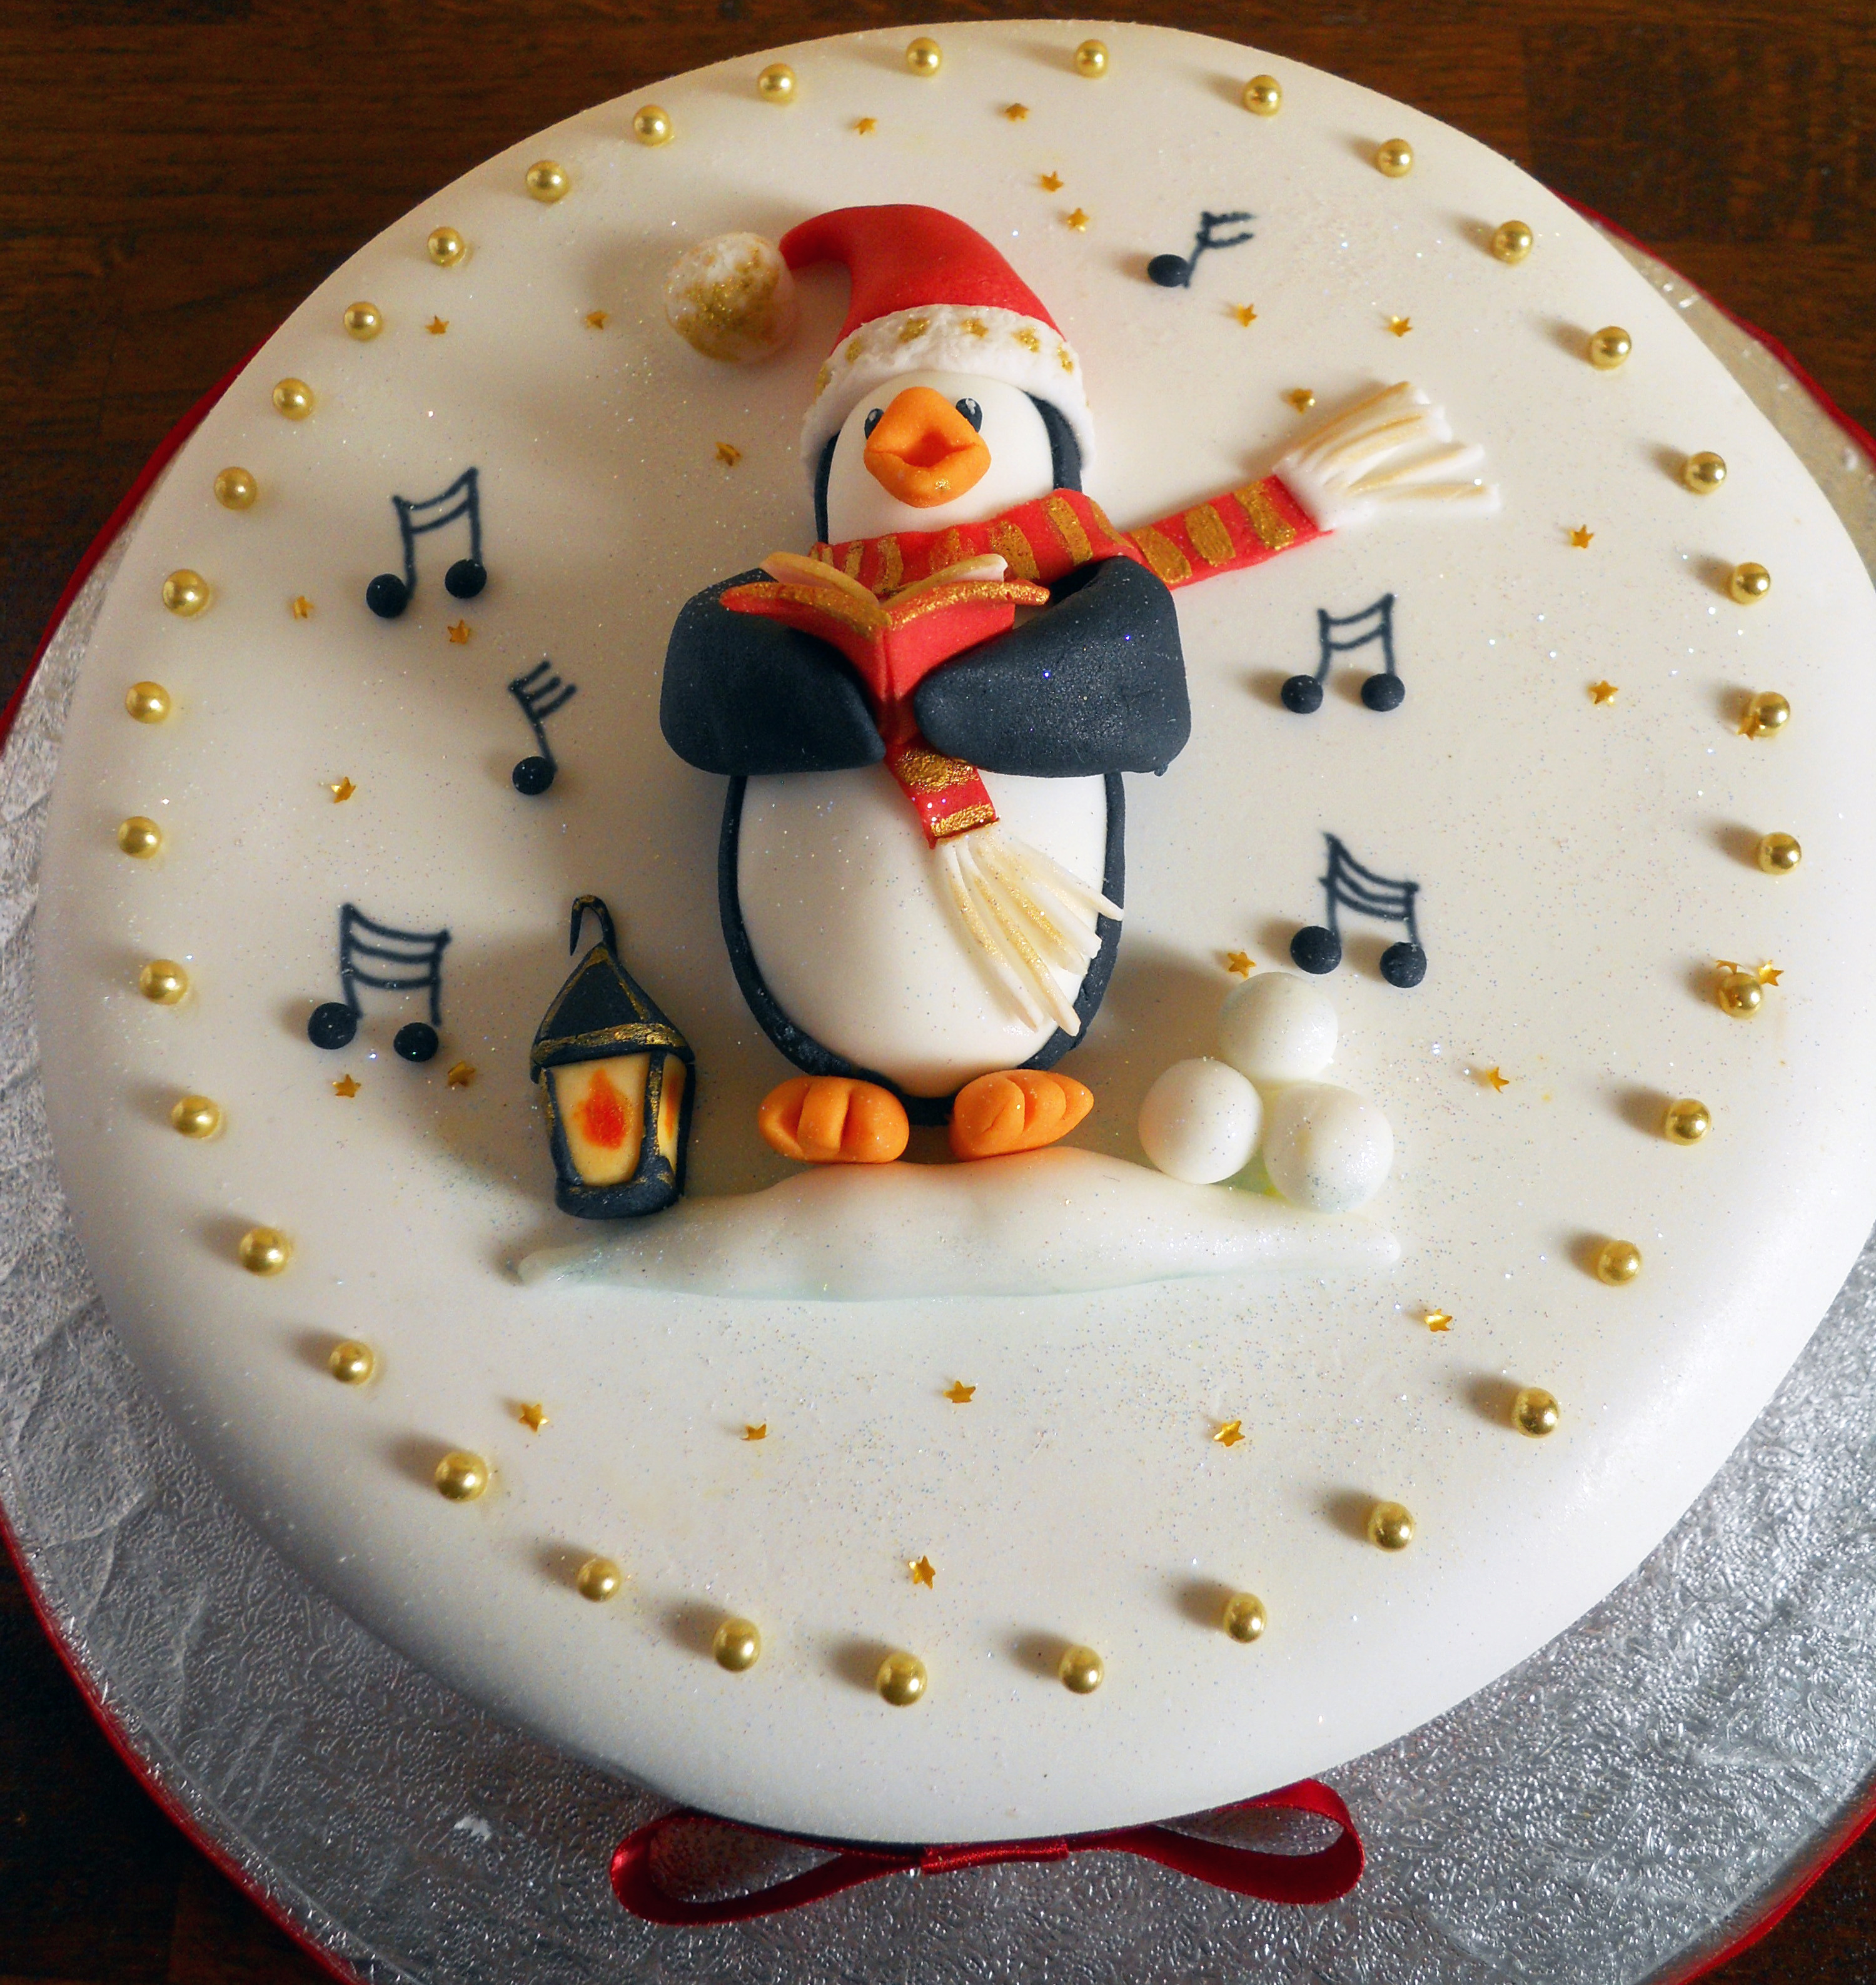 Christmas Cakes Images
 Penguin Carol Singer Christmas Cake – Orders now being taken